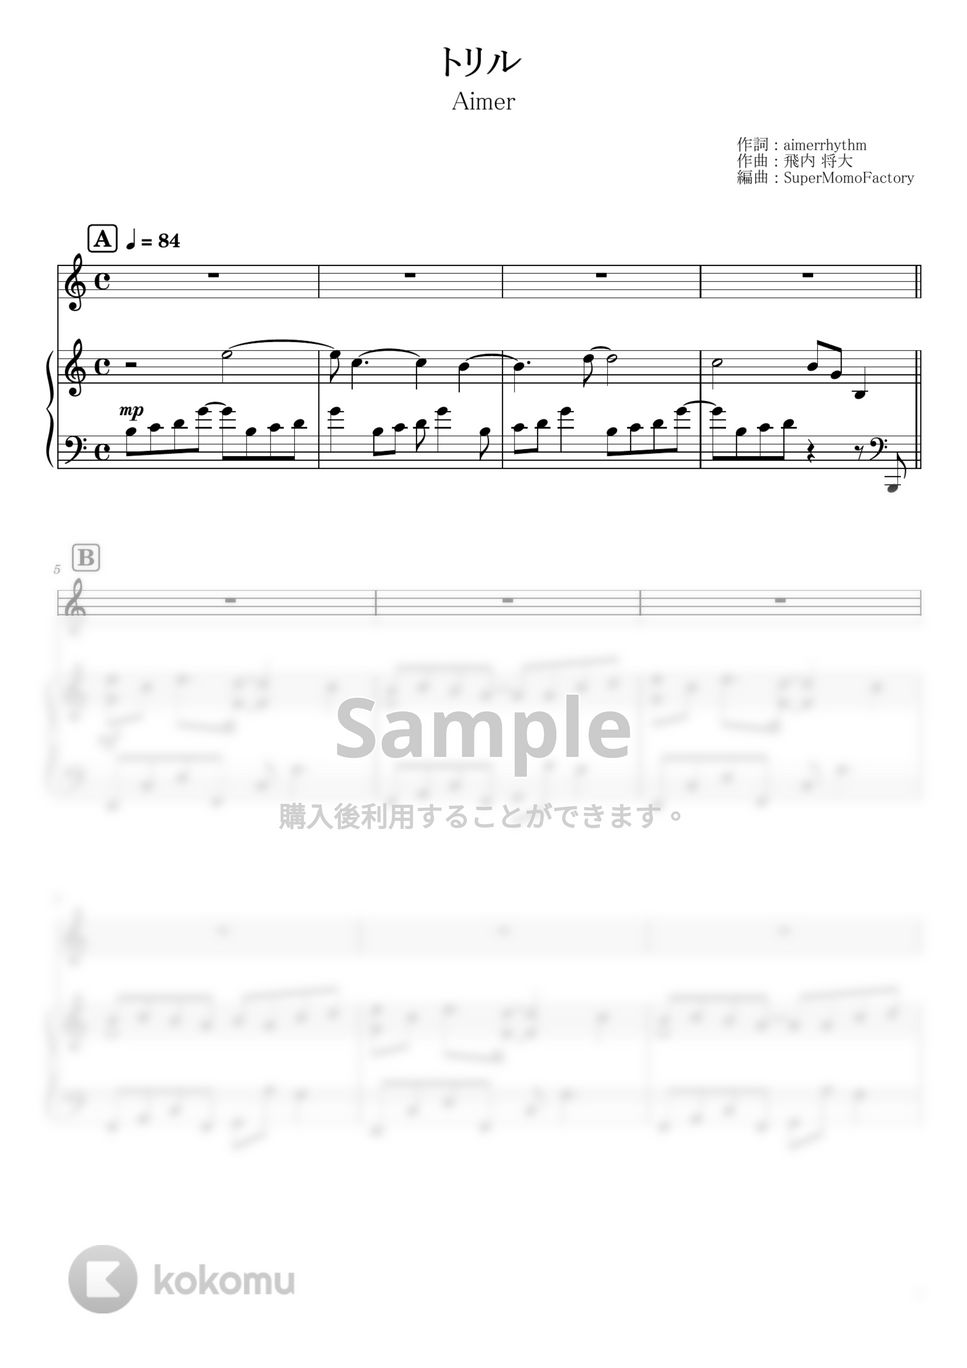 Aimer - トリル (ピアノ弾き語り / 伴奏 / 中級) by SuperMomoFactory